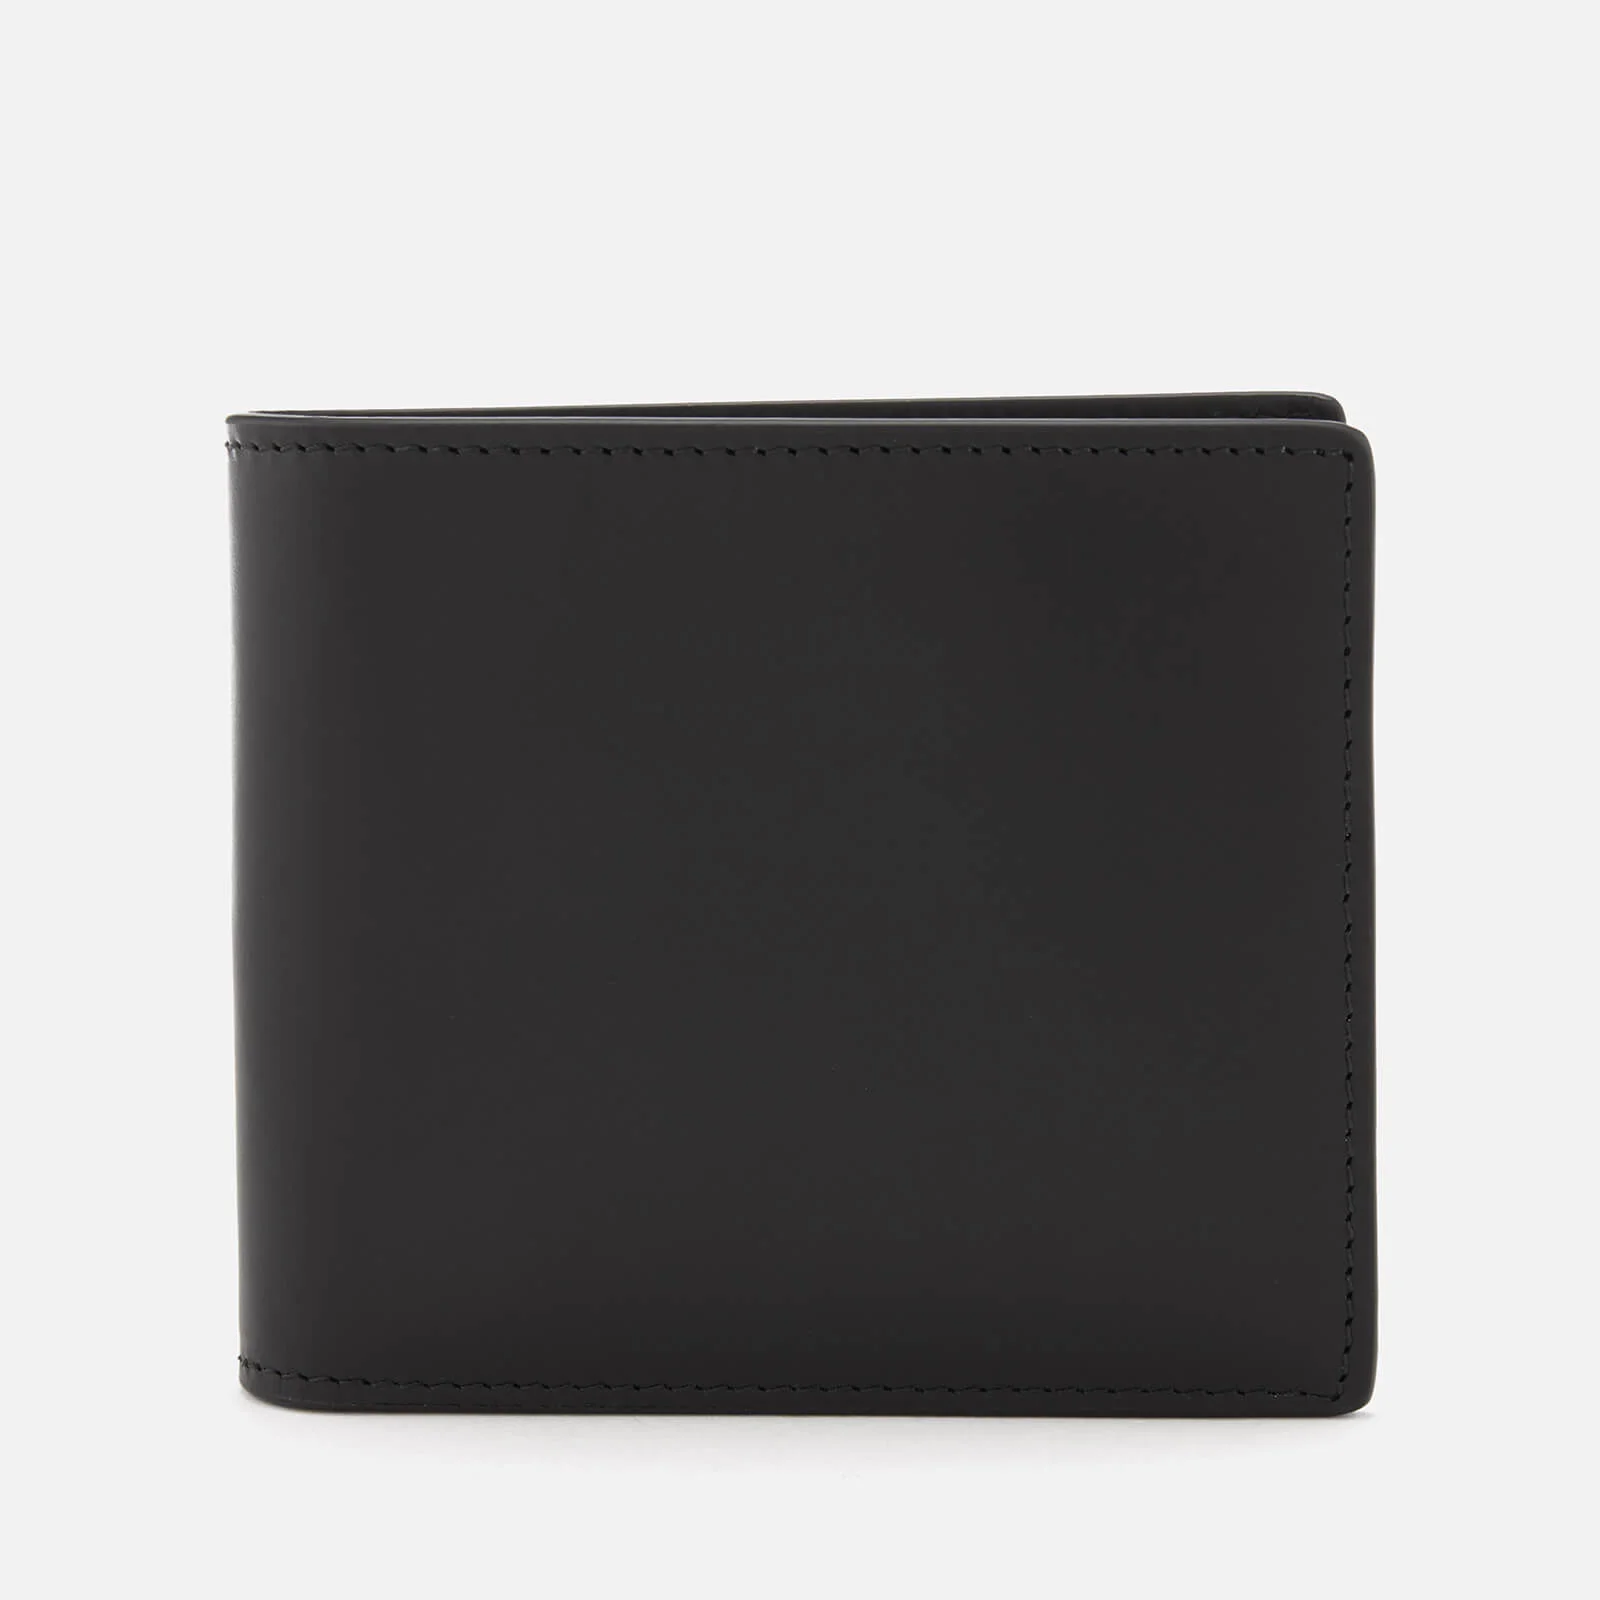 Maison Margiela Men's Bi Fold Wallet - Black Image 1